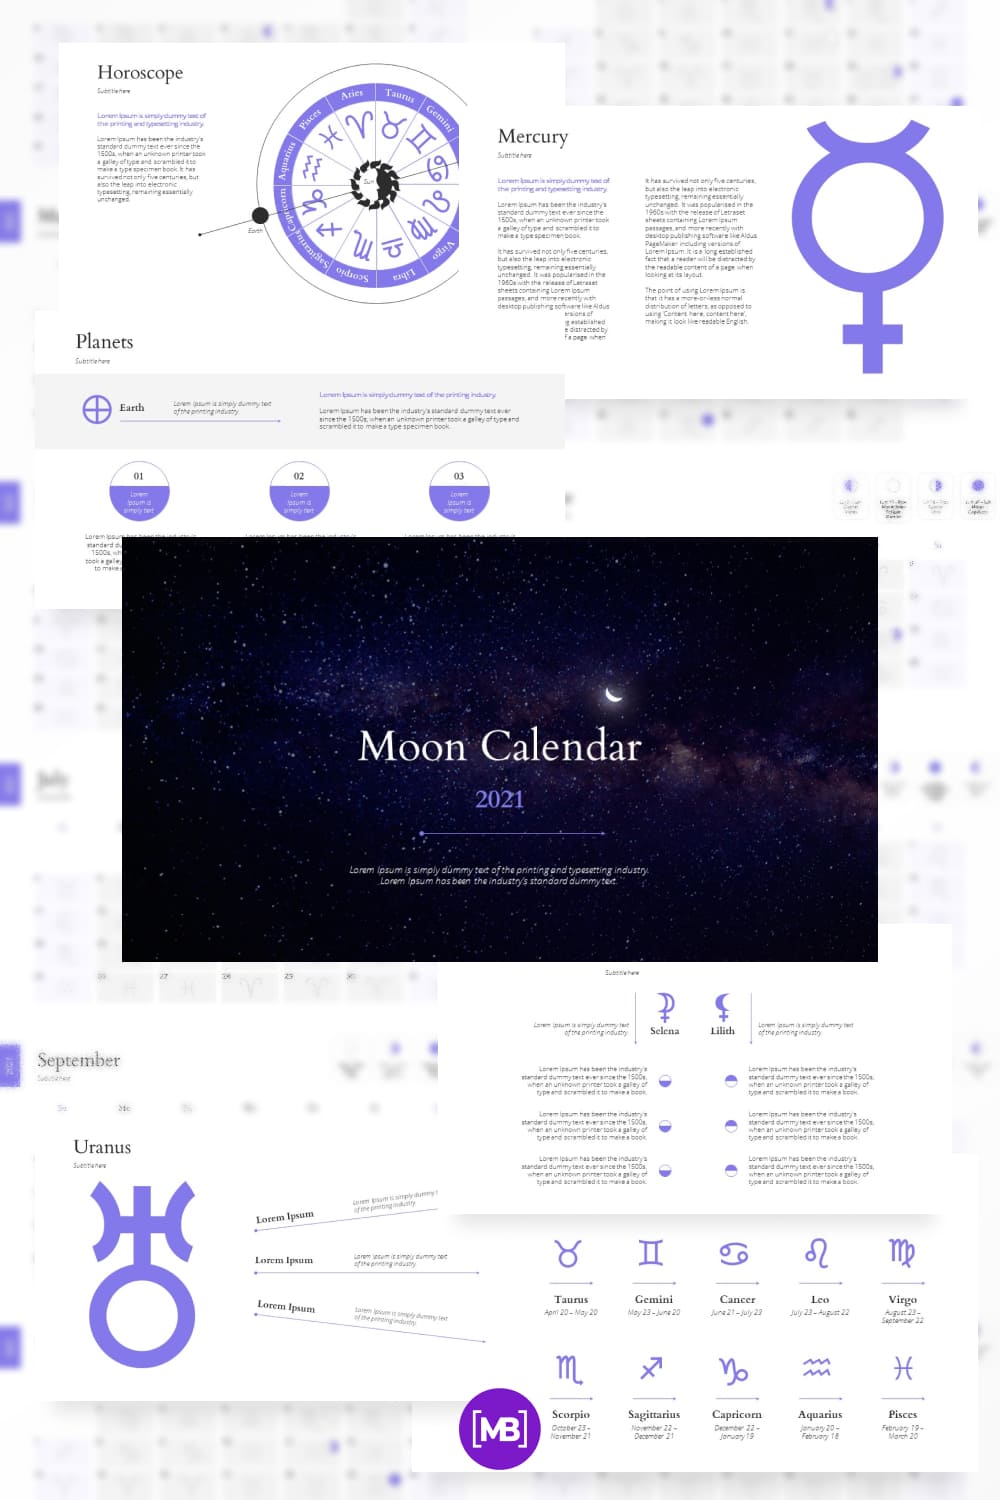 Moon calendar 2021 powerpoint presentation template.